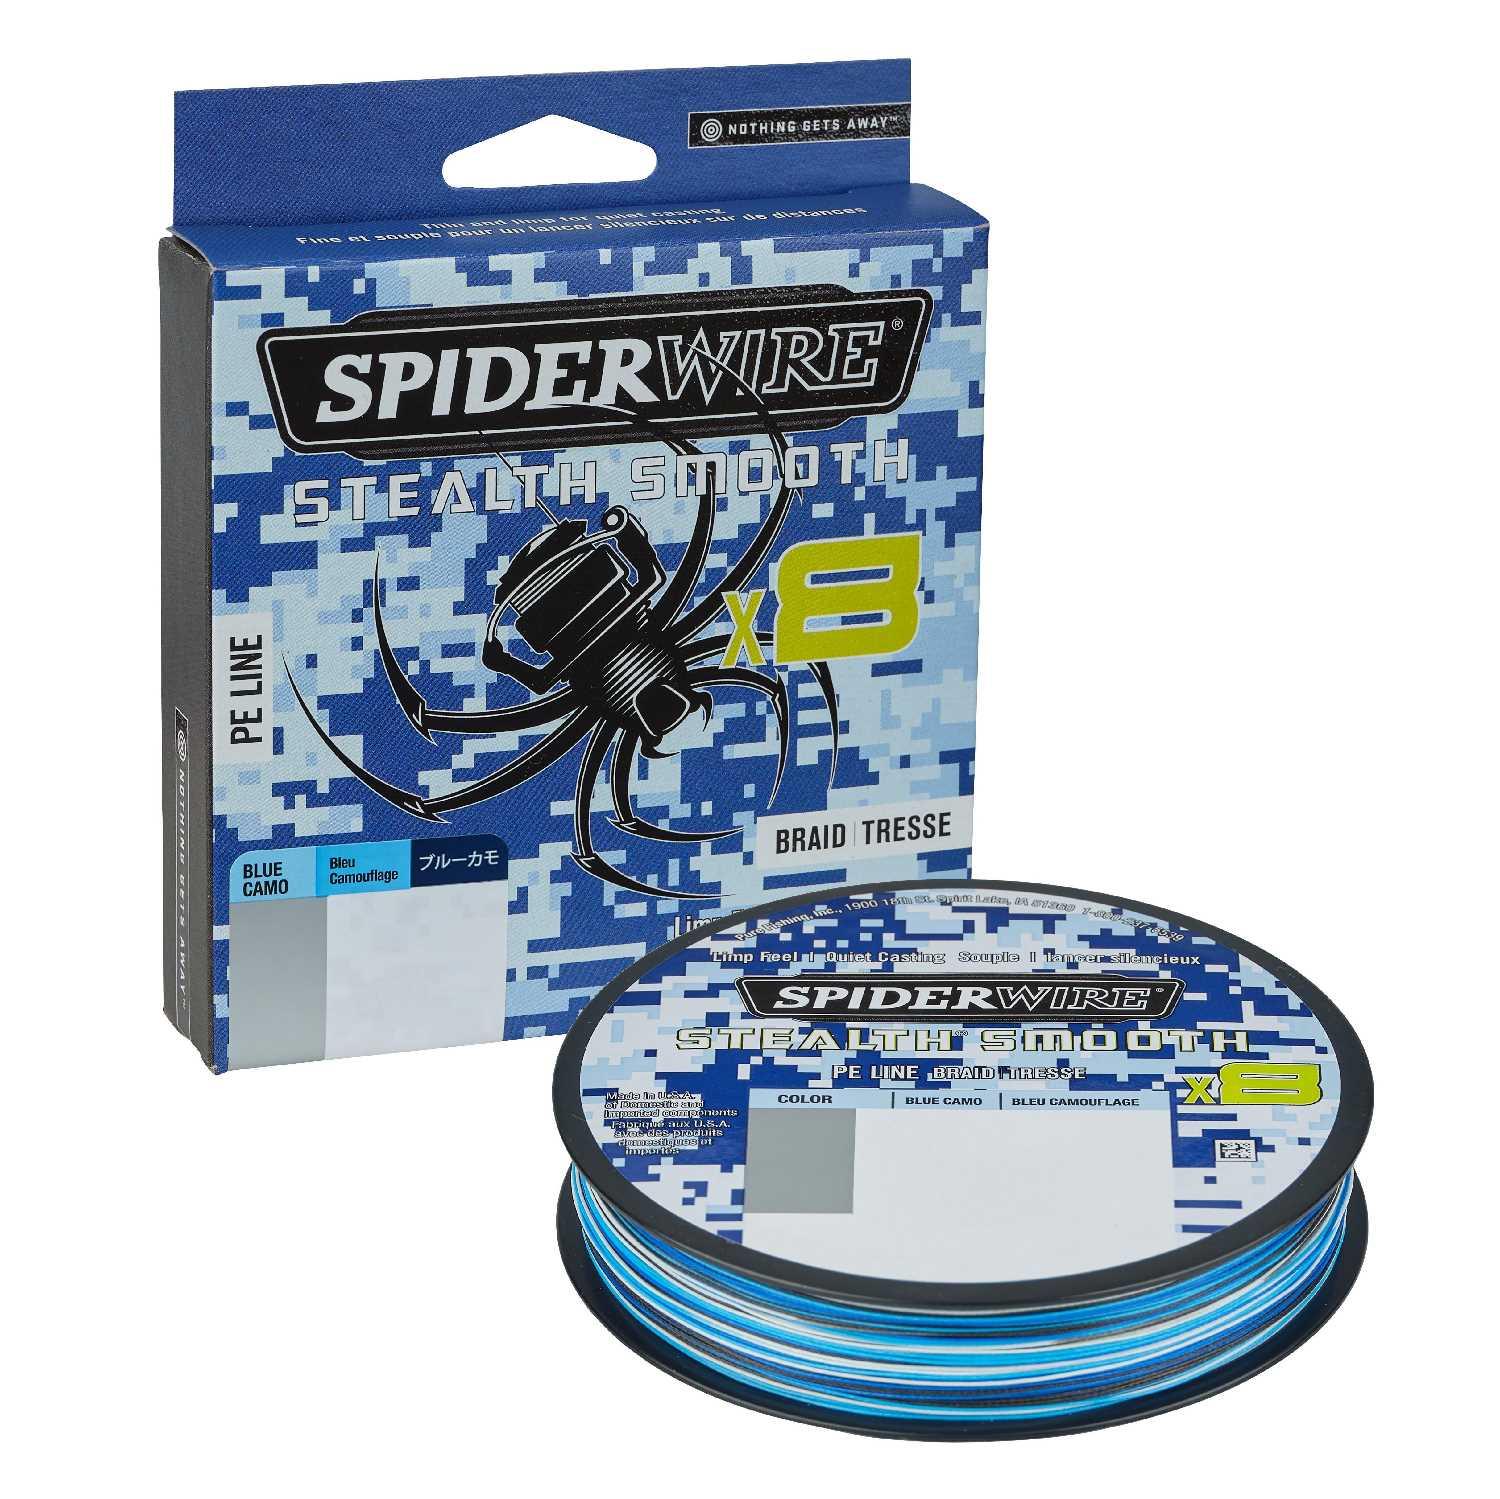 Spiderwire Stealth Smooth8 Translucent Braid 300m All Sizes